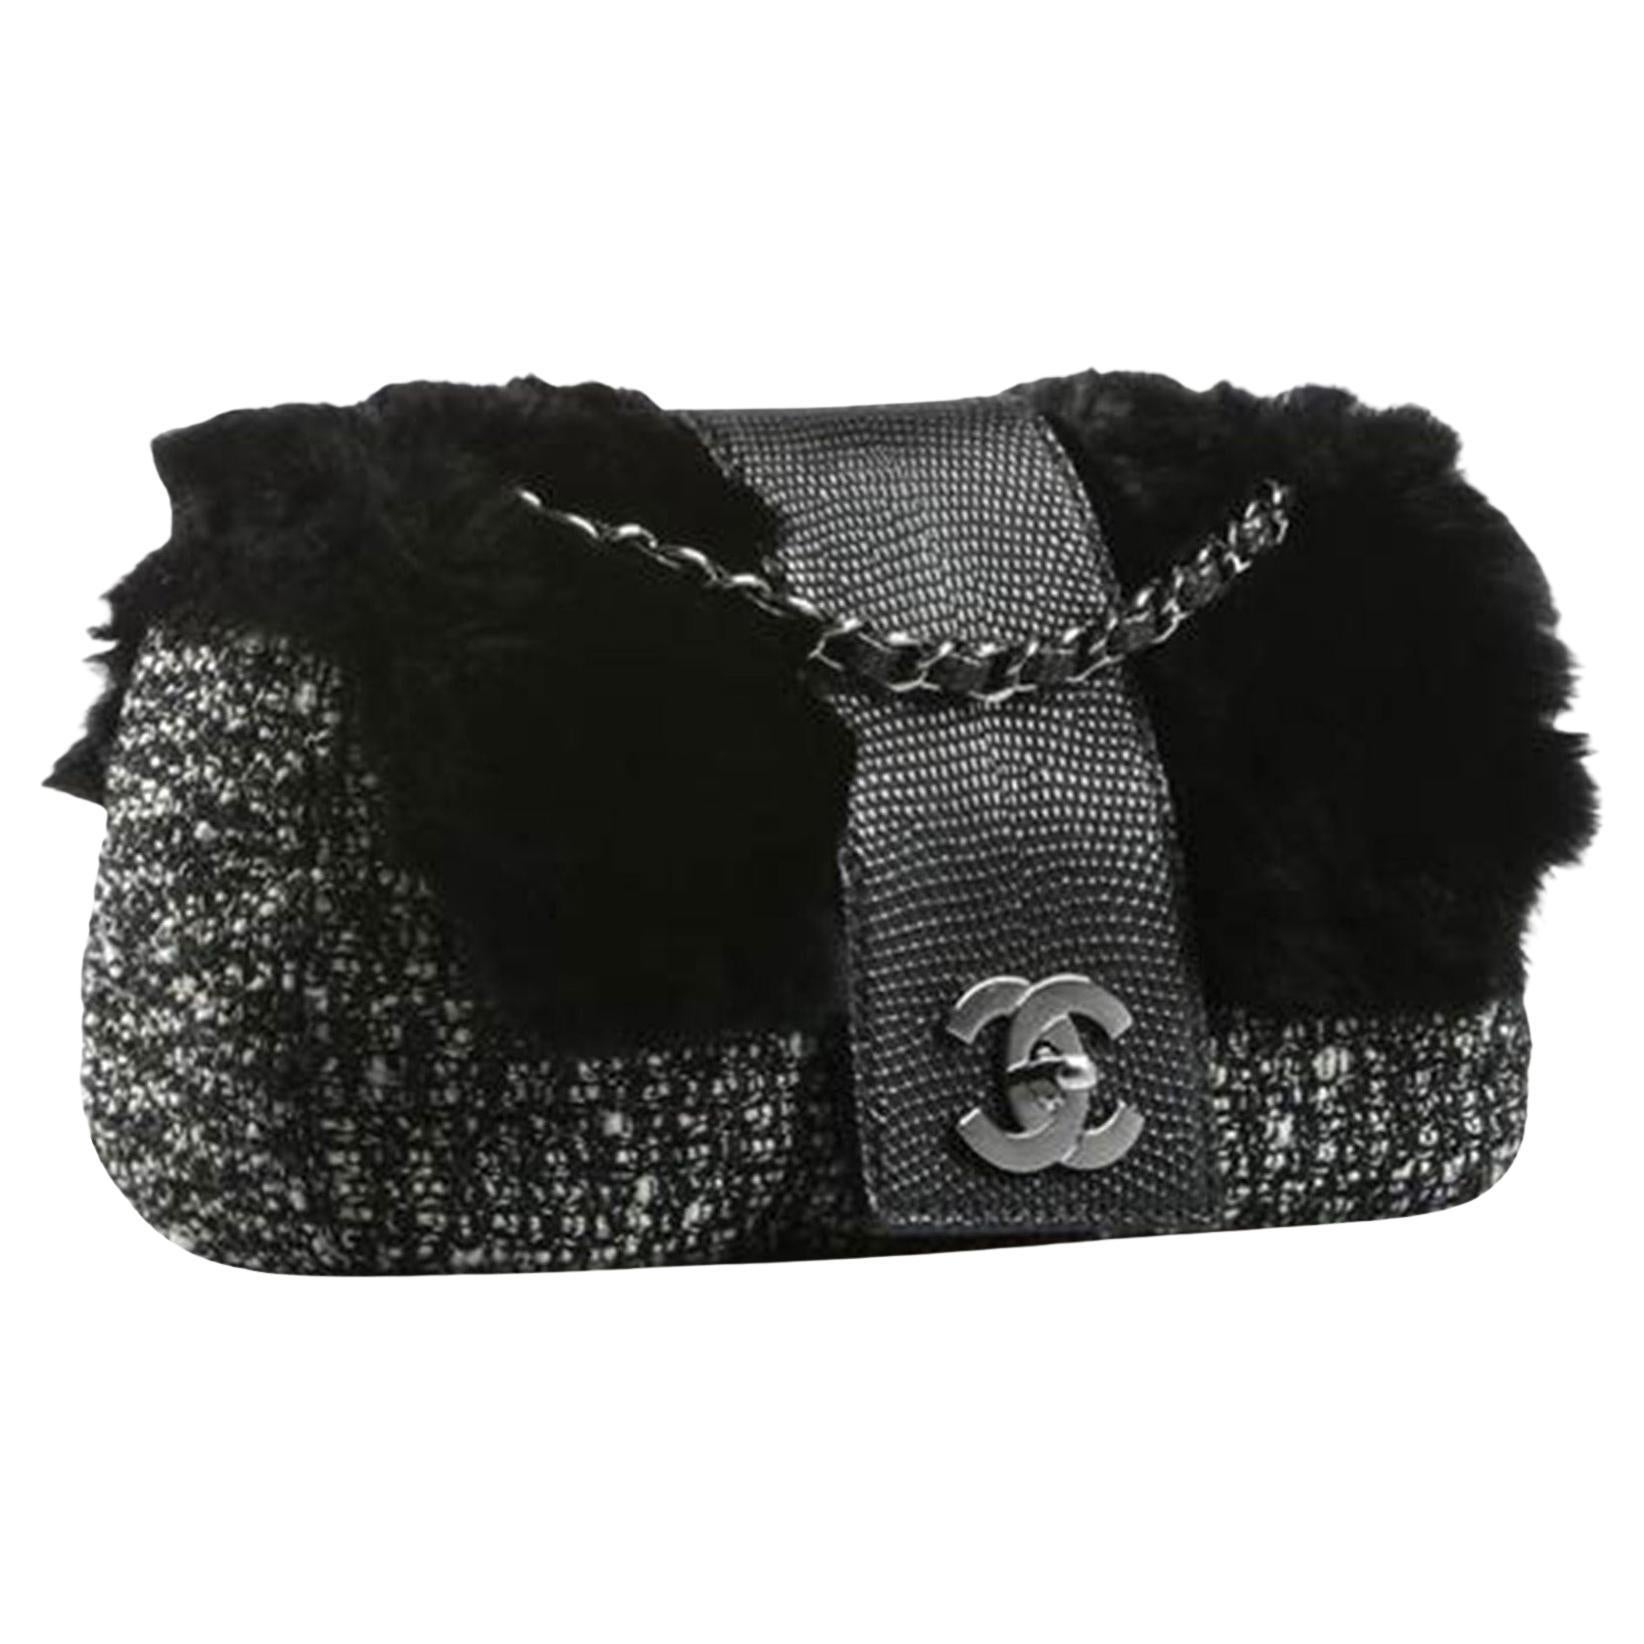 Chanel Classic Flap Limited Edition 2005 Black & White Grey Tweed Fur Lizard Bag